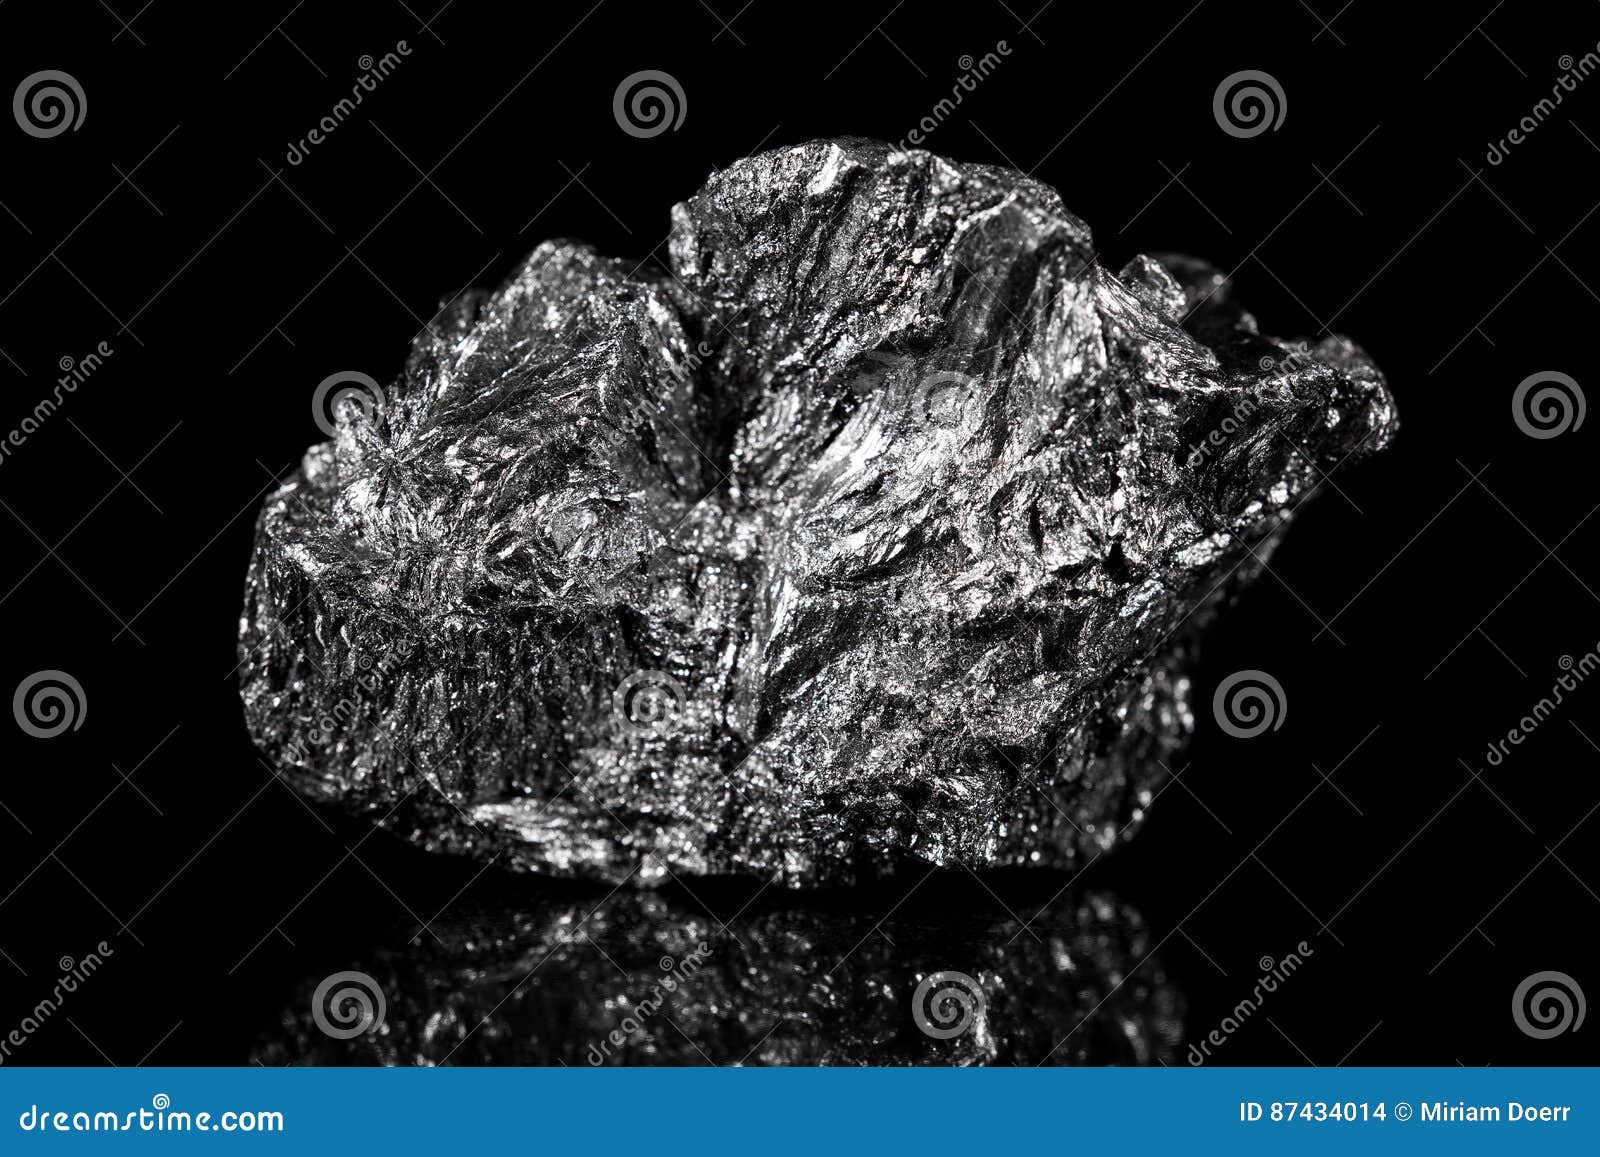 rough mineral stone of graphite, black specimen carbon